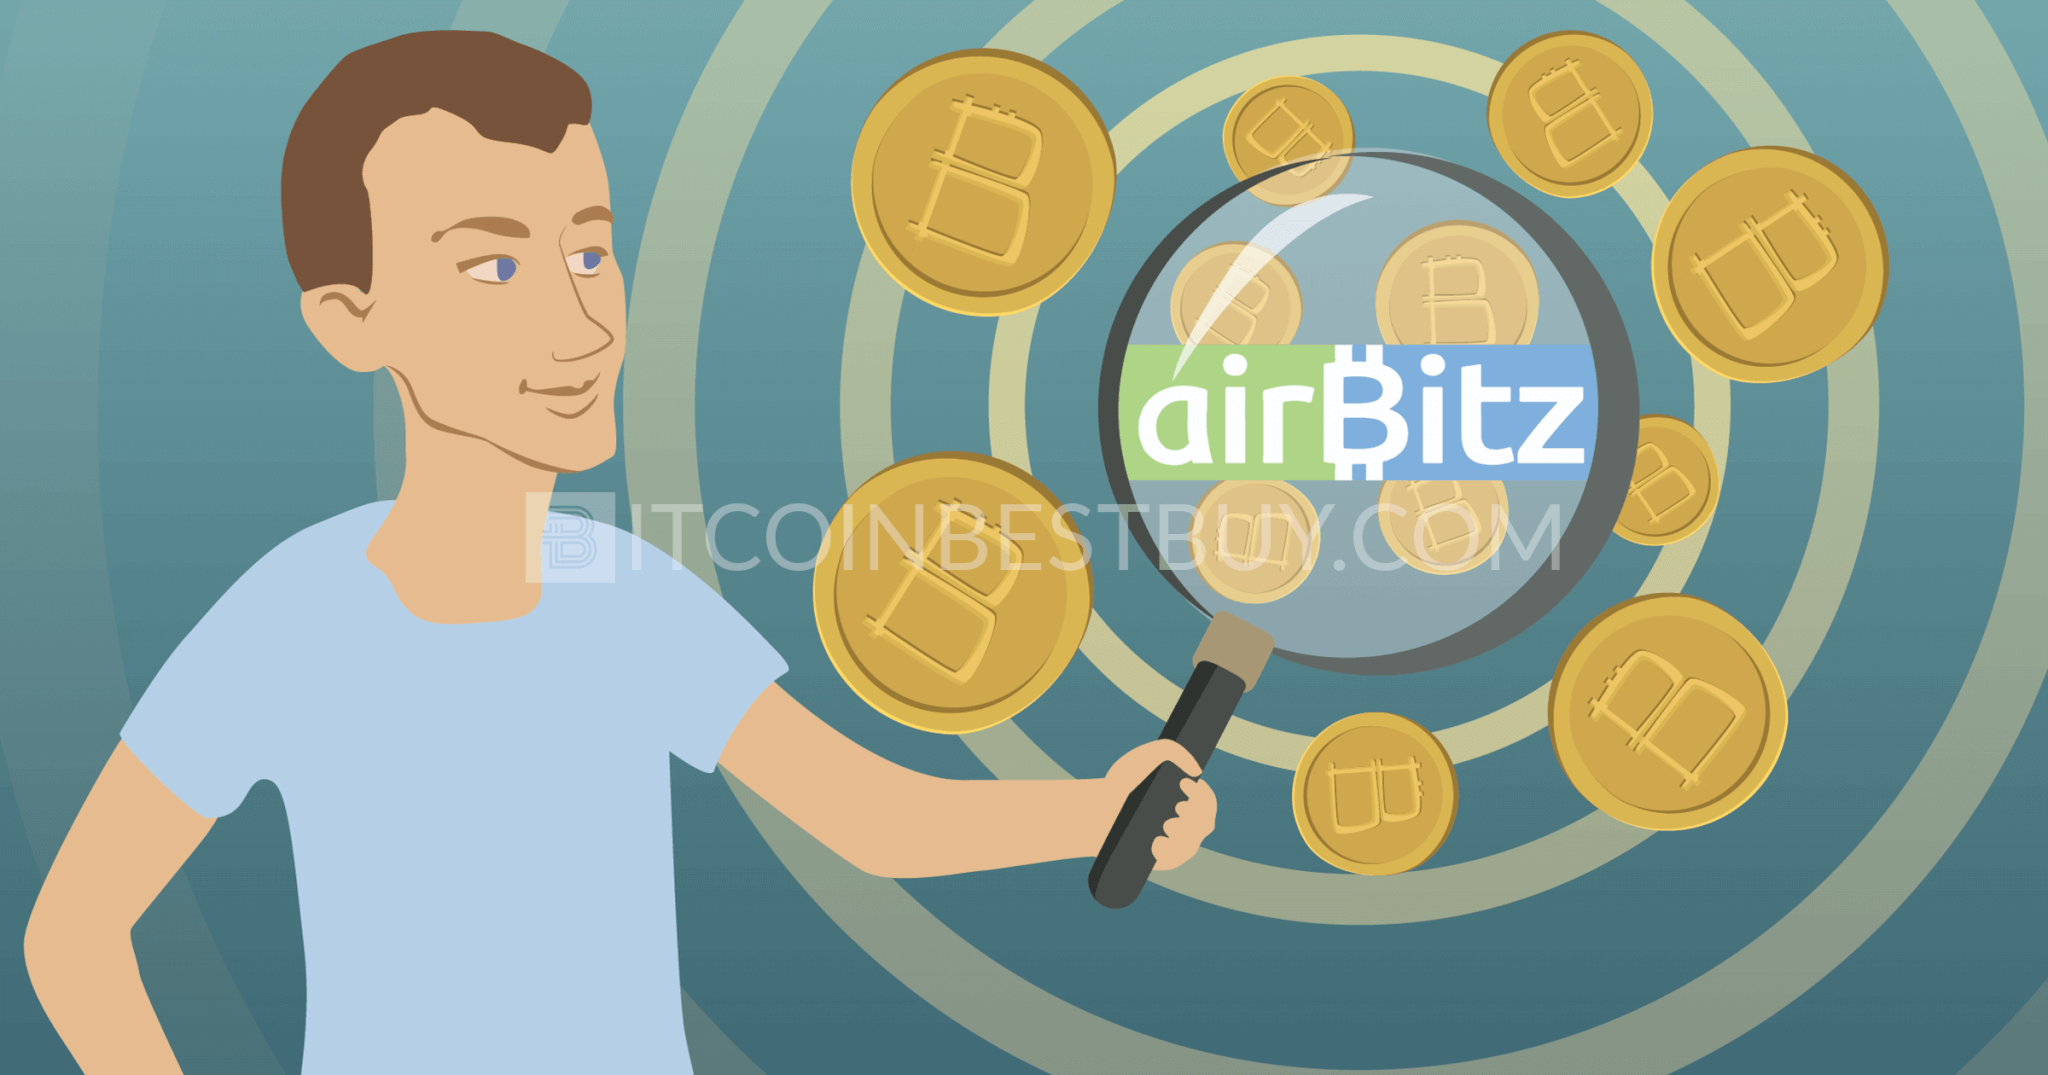 bity review usa buy sell bitcoin airbitz